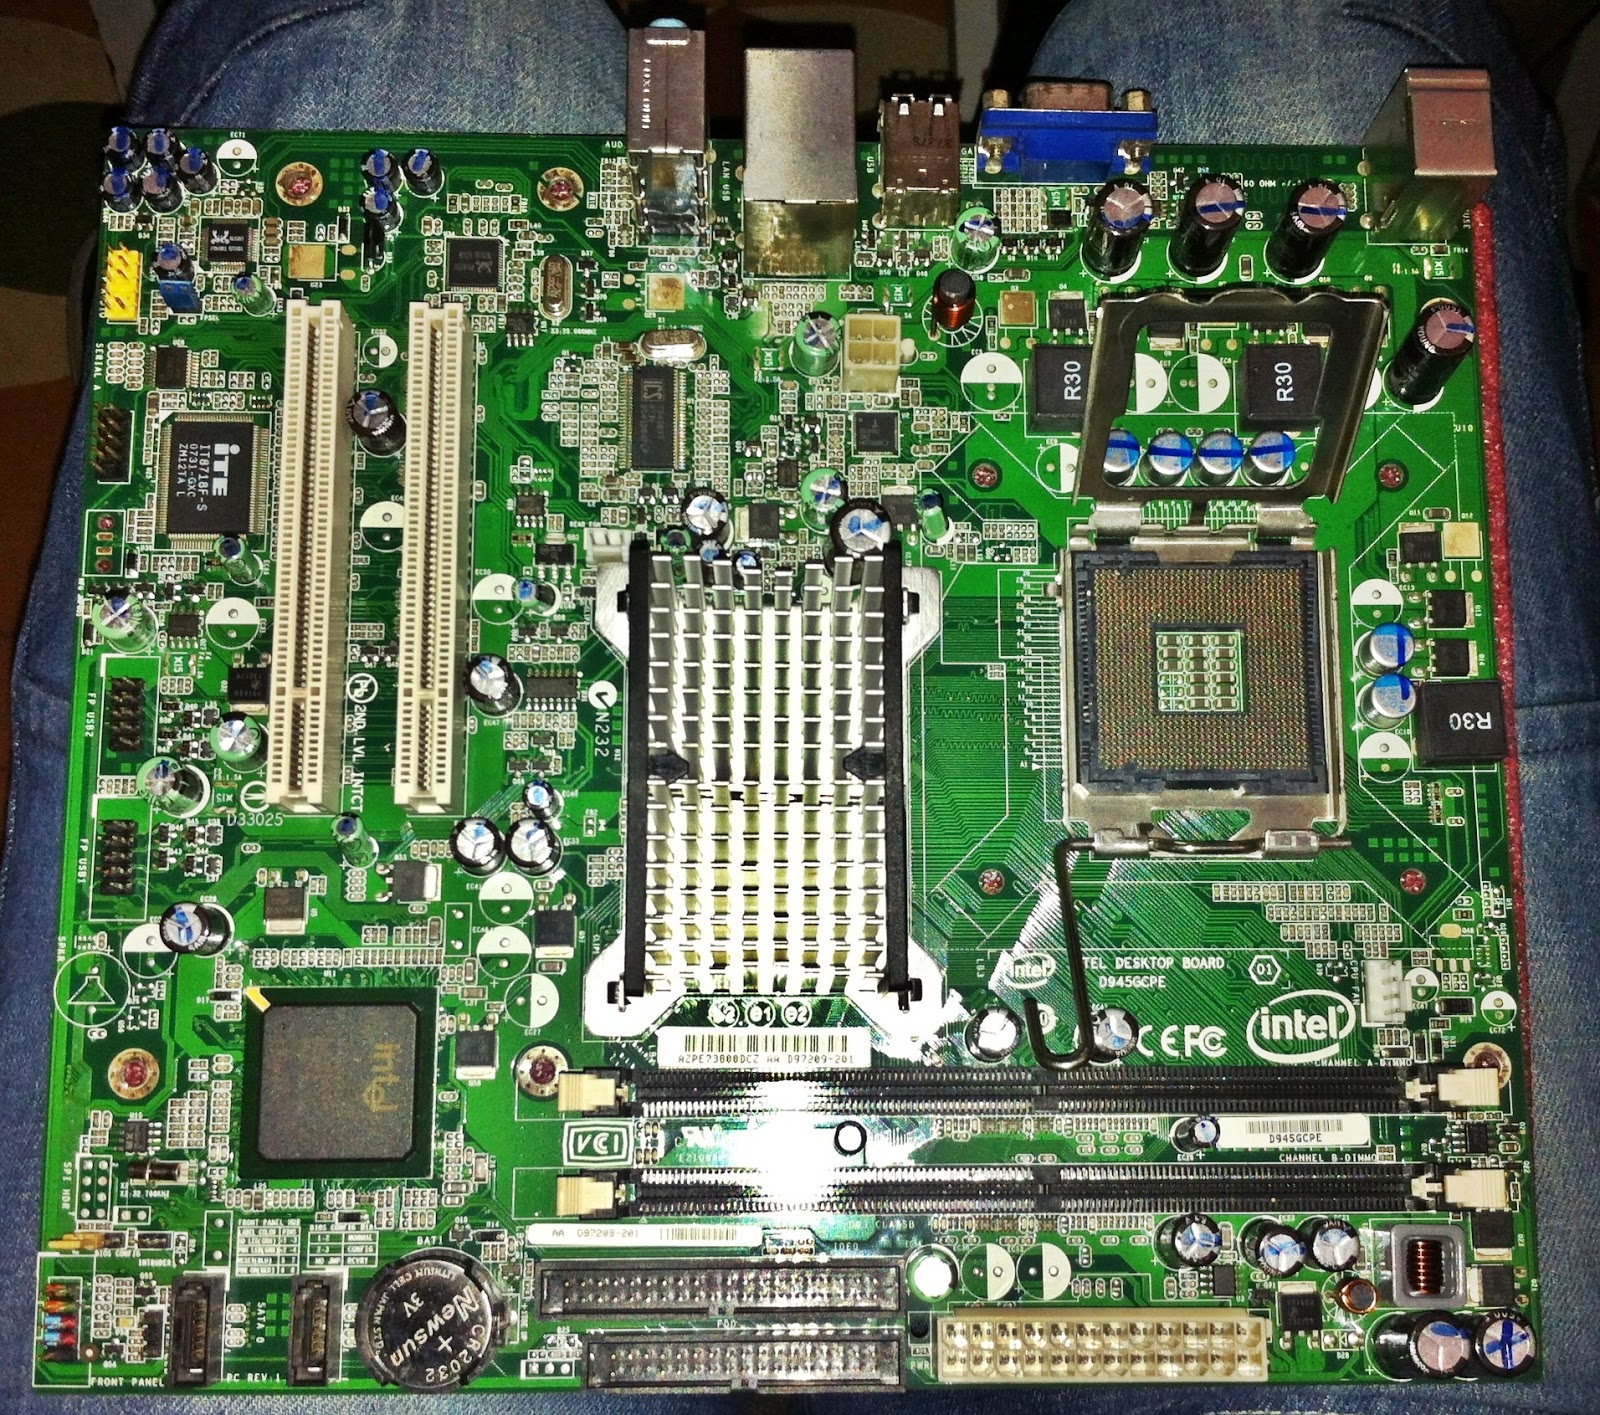 I5 Desktop PC Motherboard， CPU Motherboard Set DDR3 Memory 4G DualUSB 3.0 SATA3 Computer Parts， Mainboard for B75， LGA 1155，DDR3 1066/1333/1600/1866